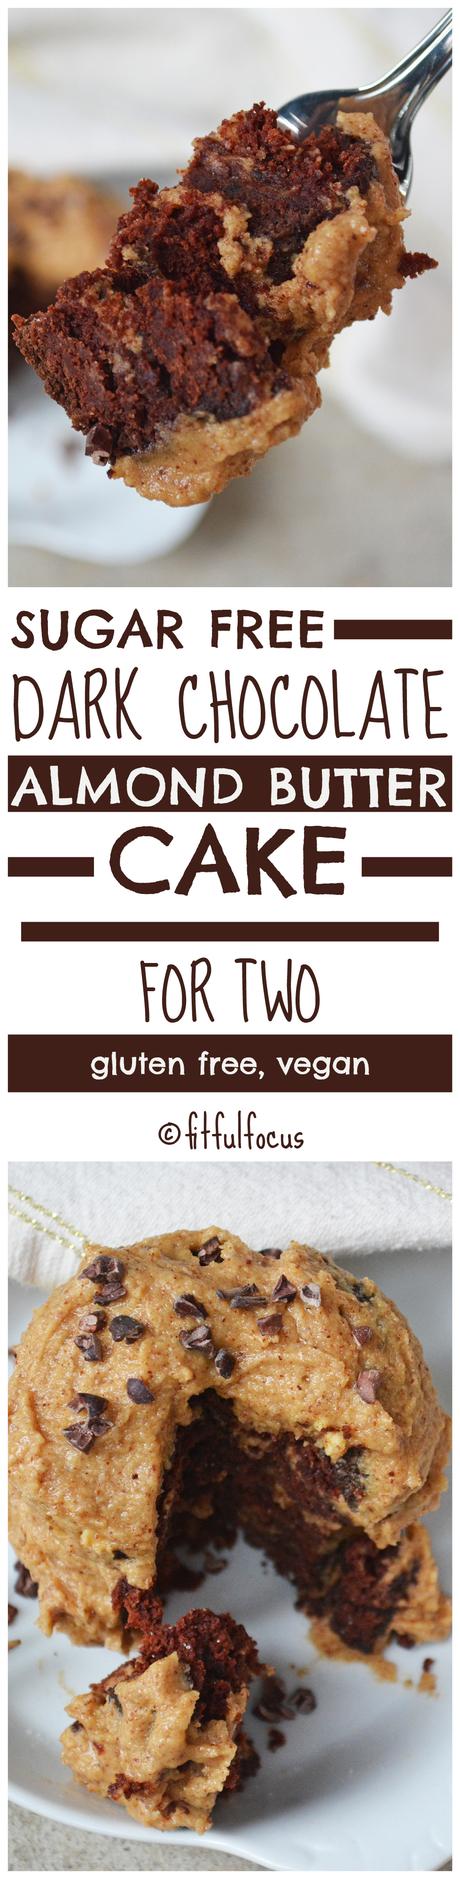 Sugar Free Dark Chocolate Almond Butter Cake For Two (gluten free, vegan)